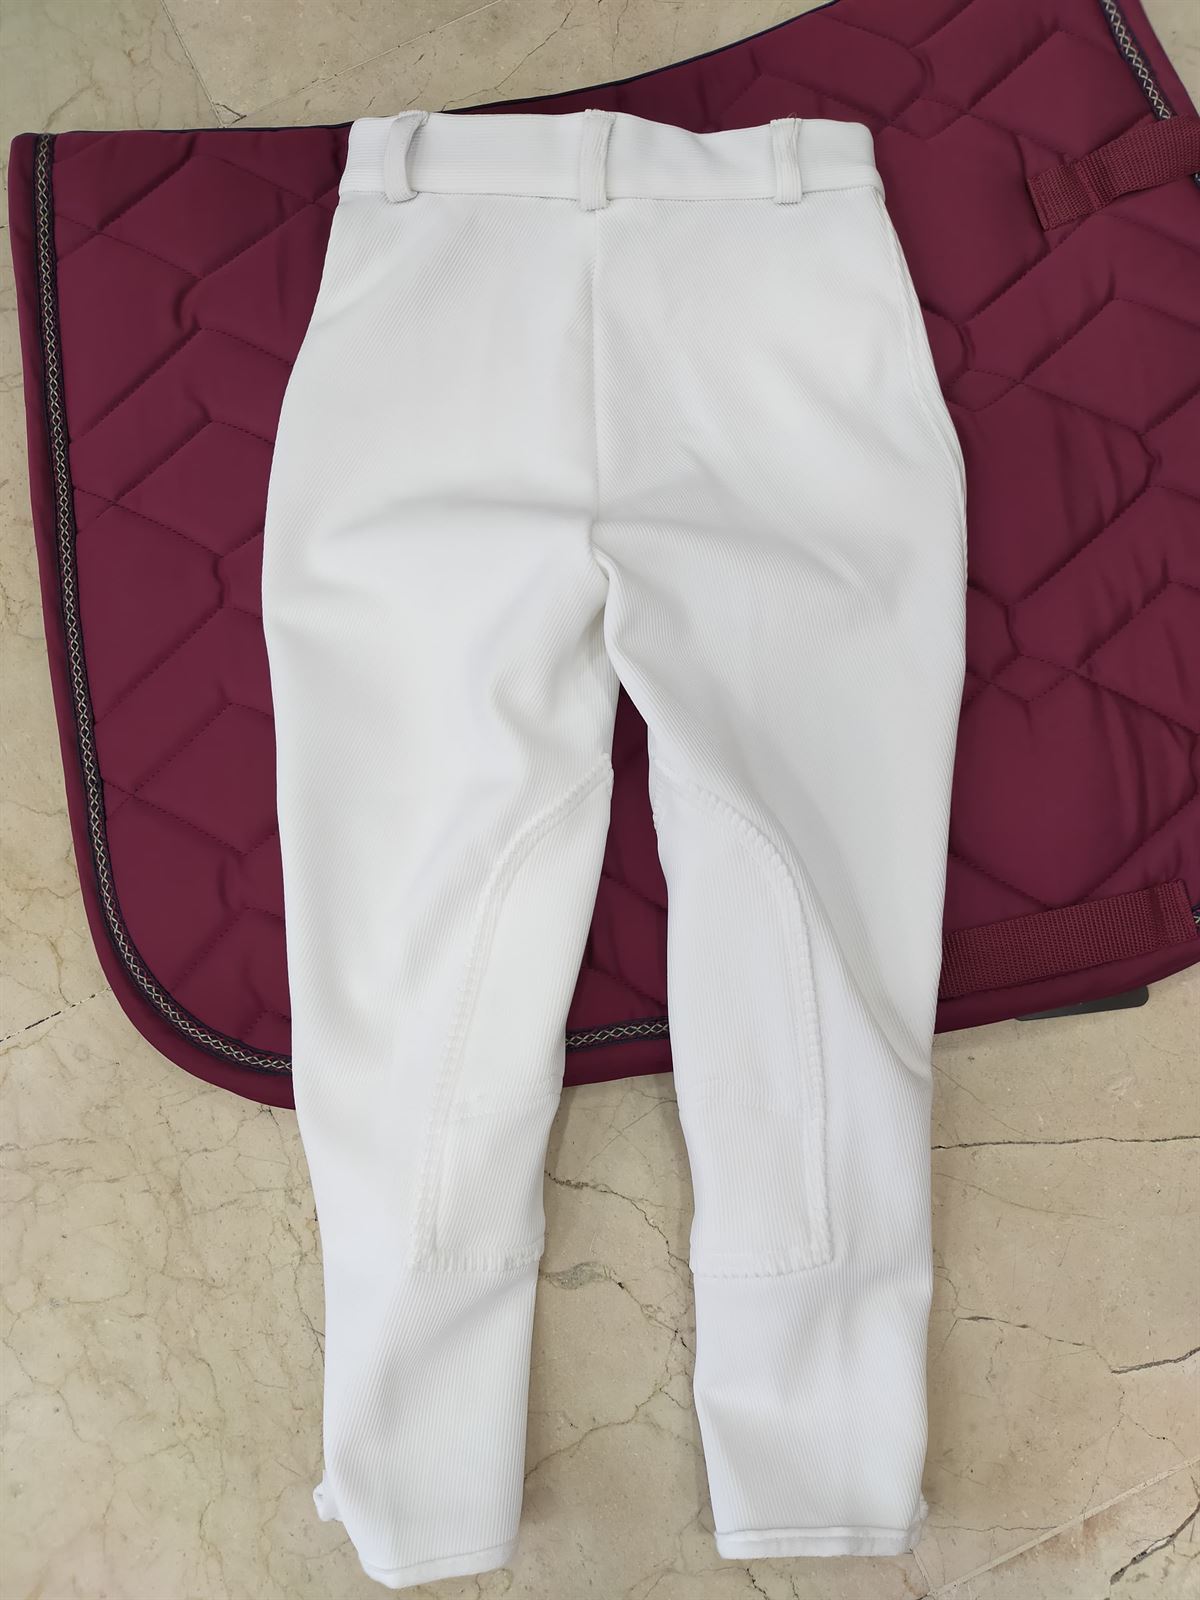 Pantalón unisex TUFF RIDER Country color blanco TALLA 10 (tallaje infantil) - Imagen 5